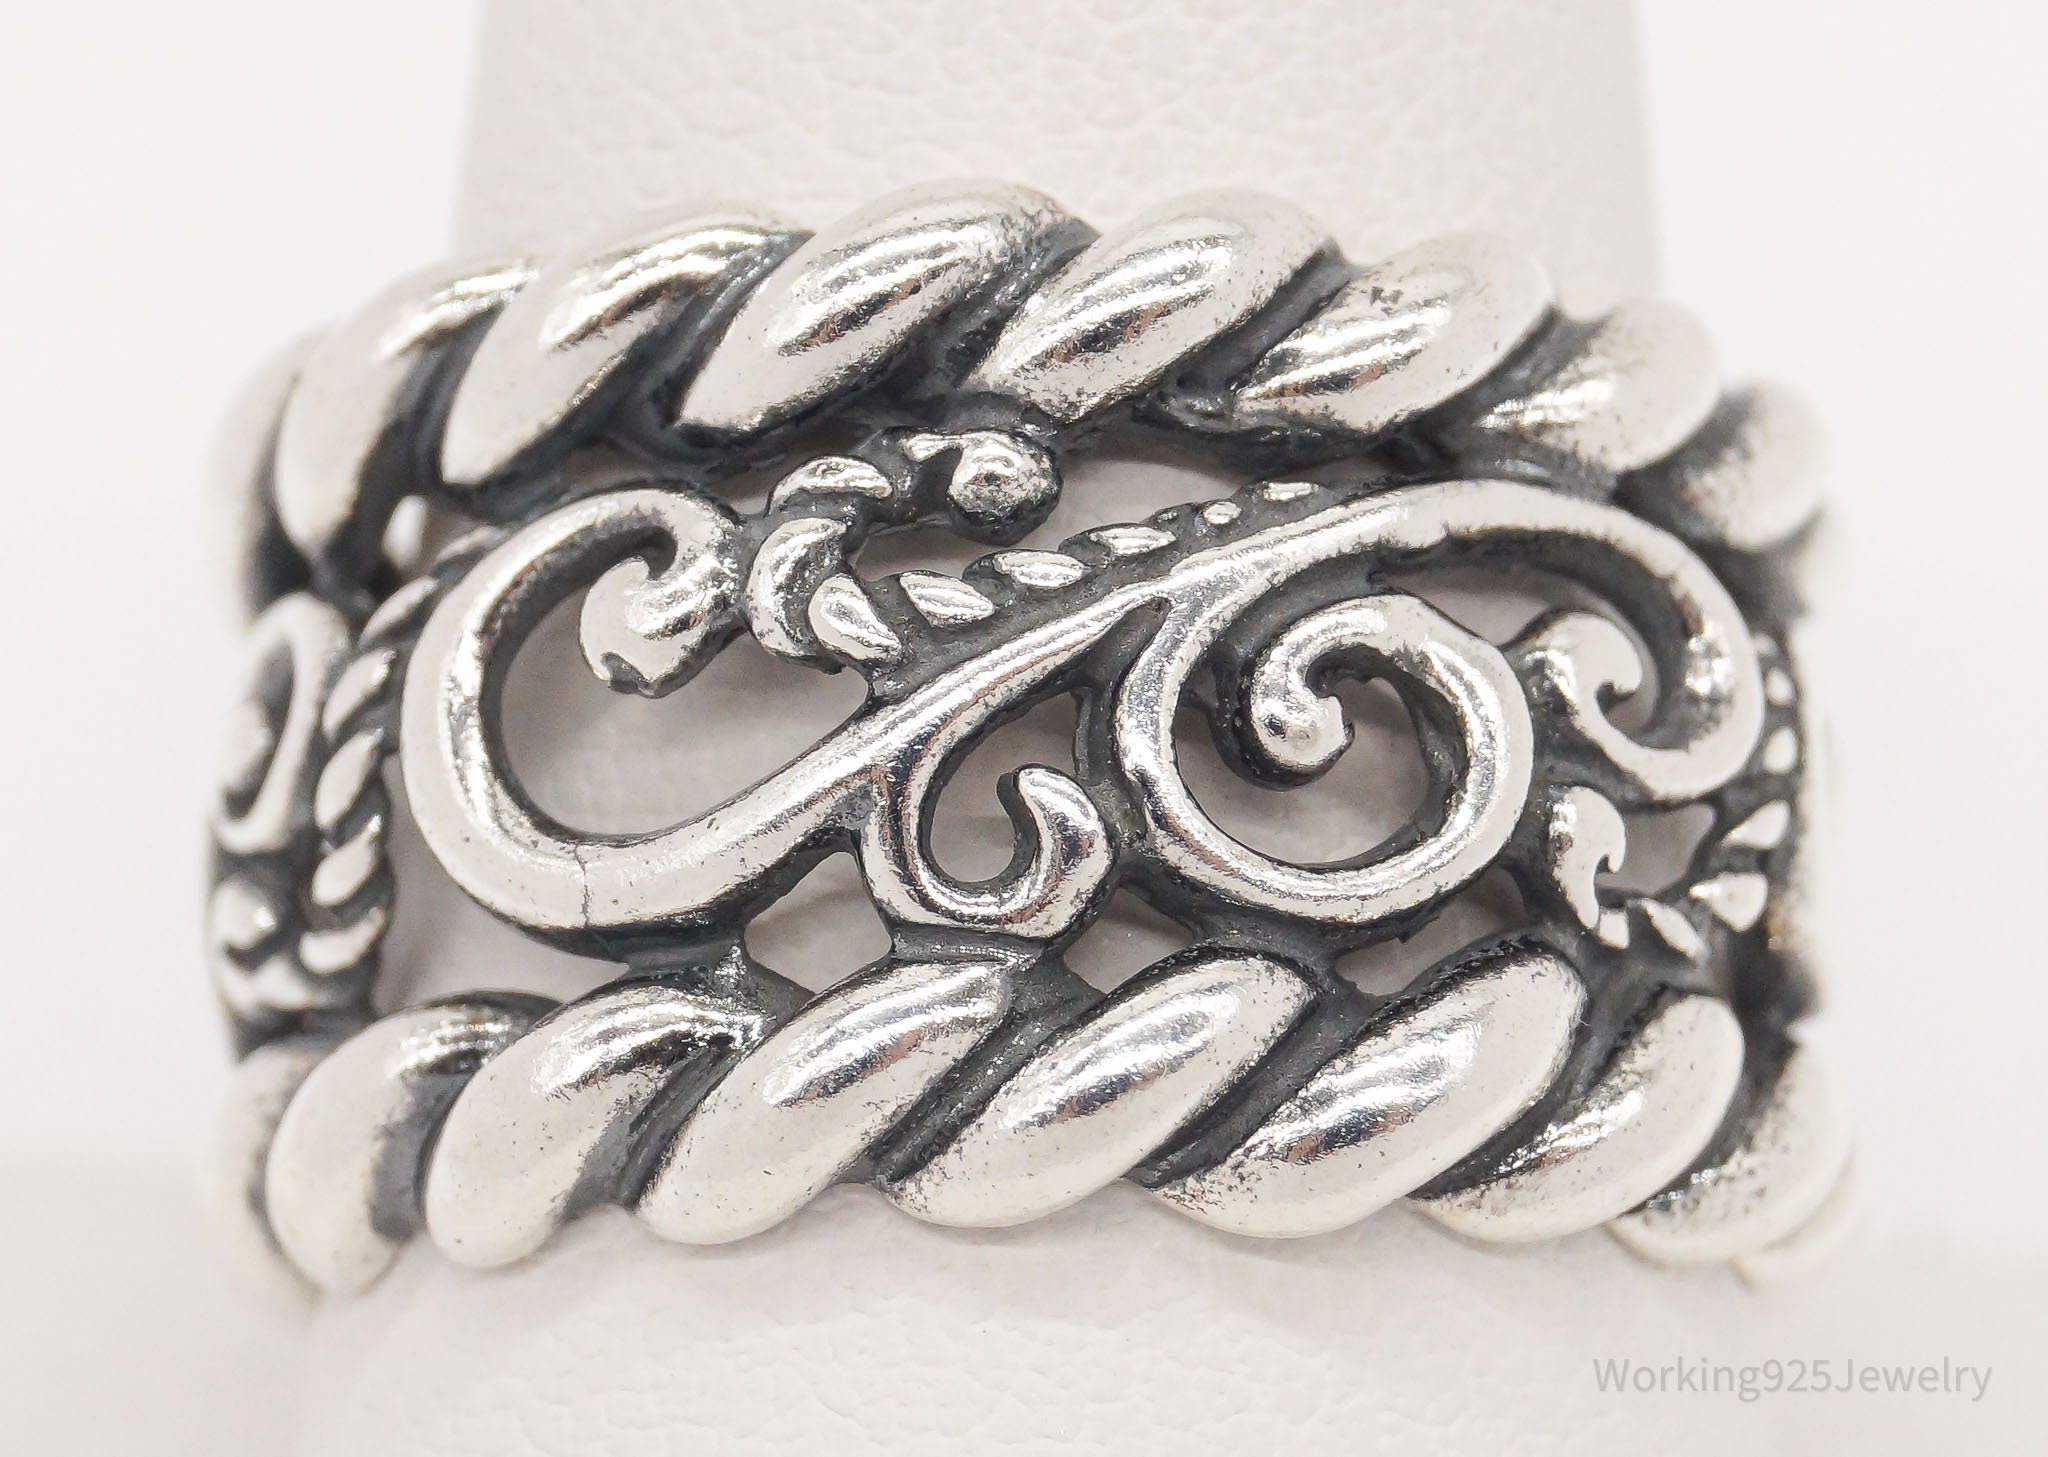 VTG Southwestern Designer Carolyn Pollack Relios Sterling Silver Ring - Size 10